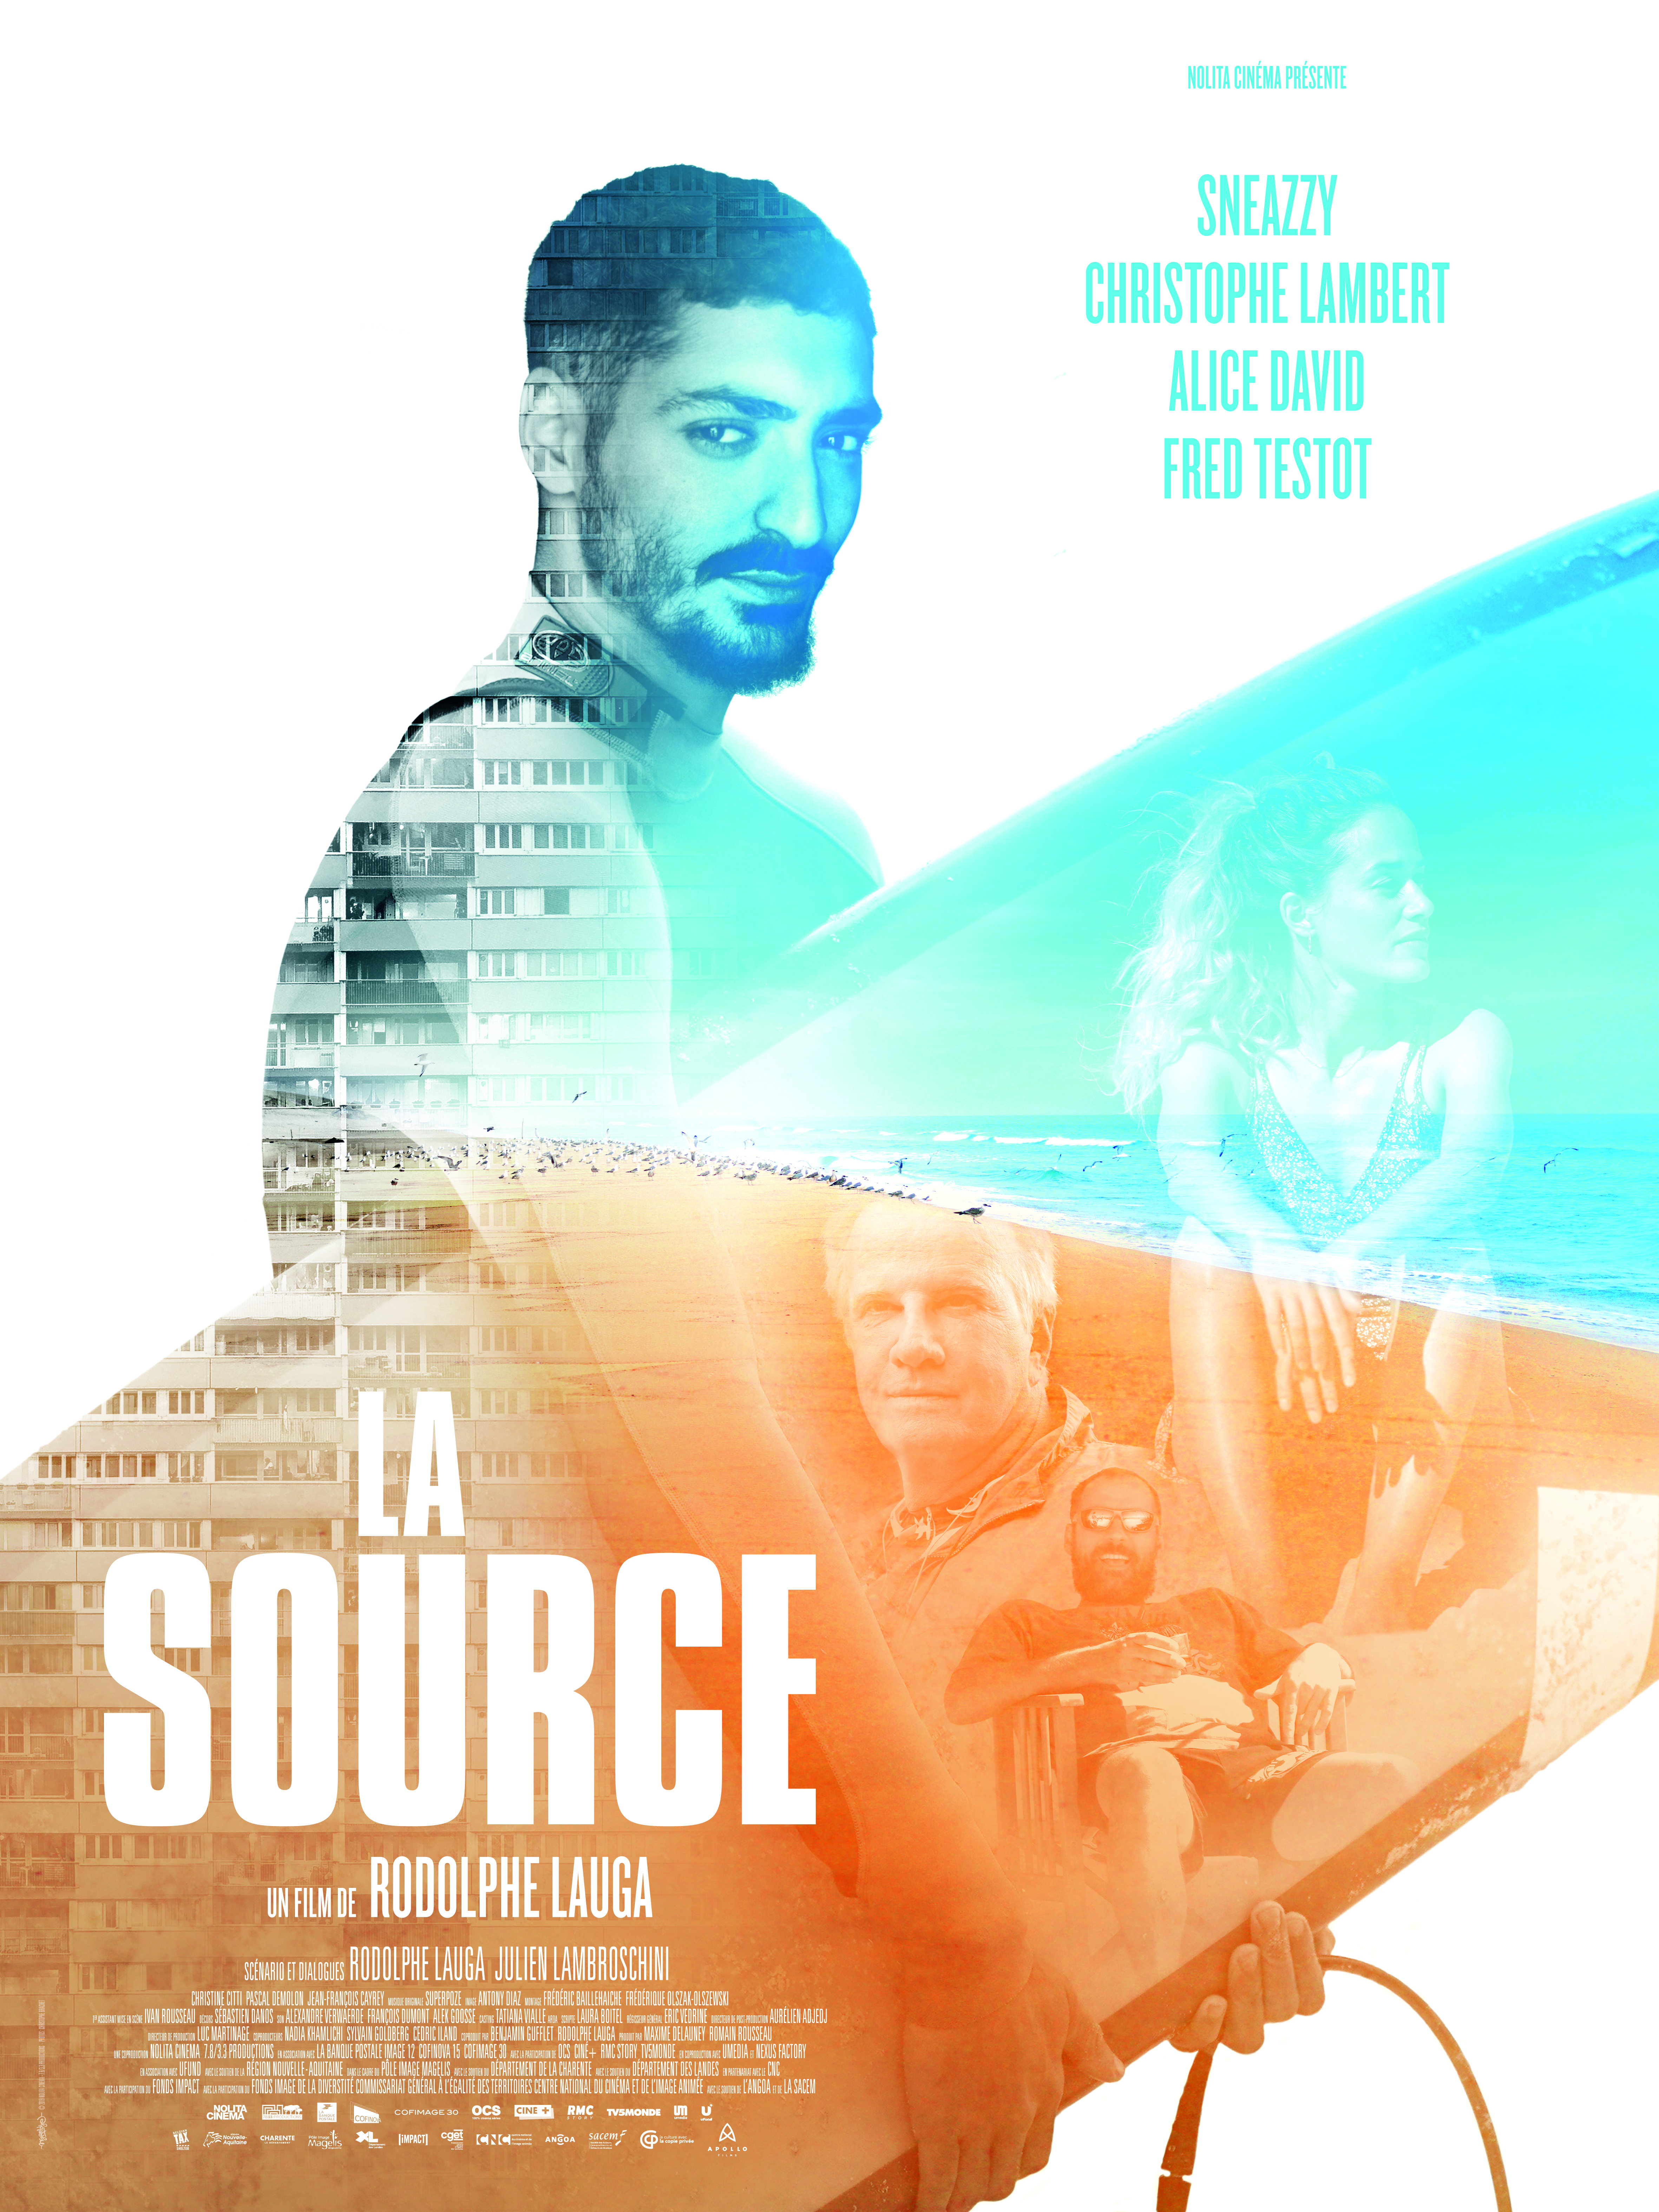 La Source (2019) Main Poster